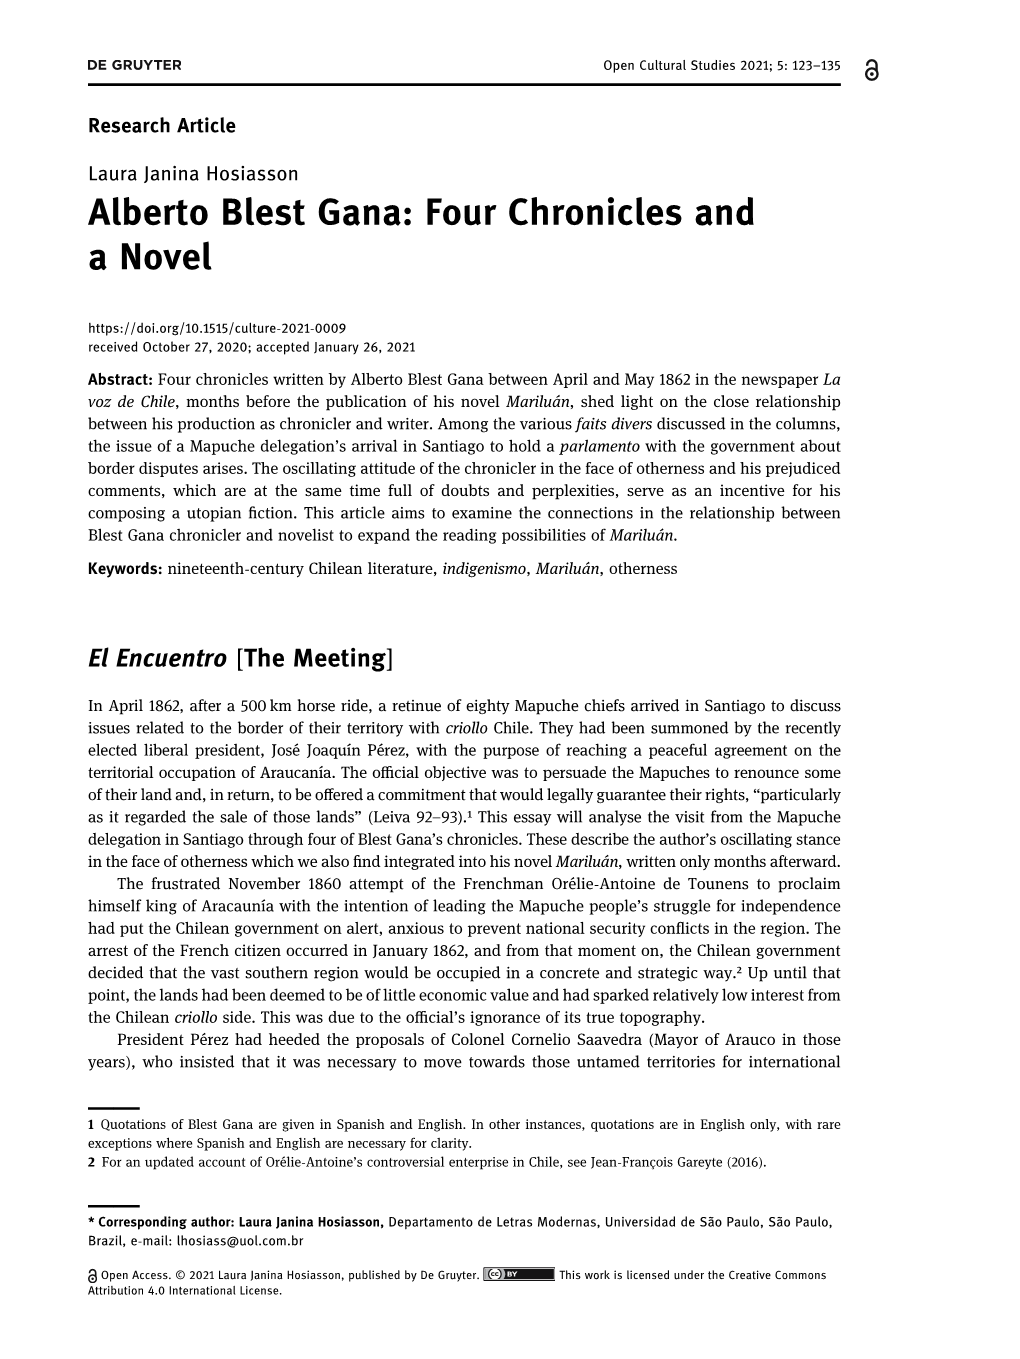 Alberto Blest Gana: Four Chronicles and a Novel